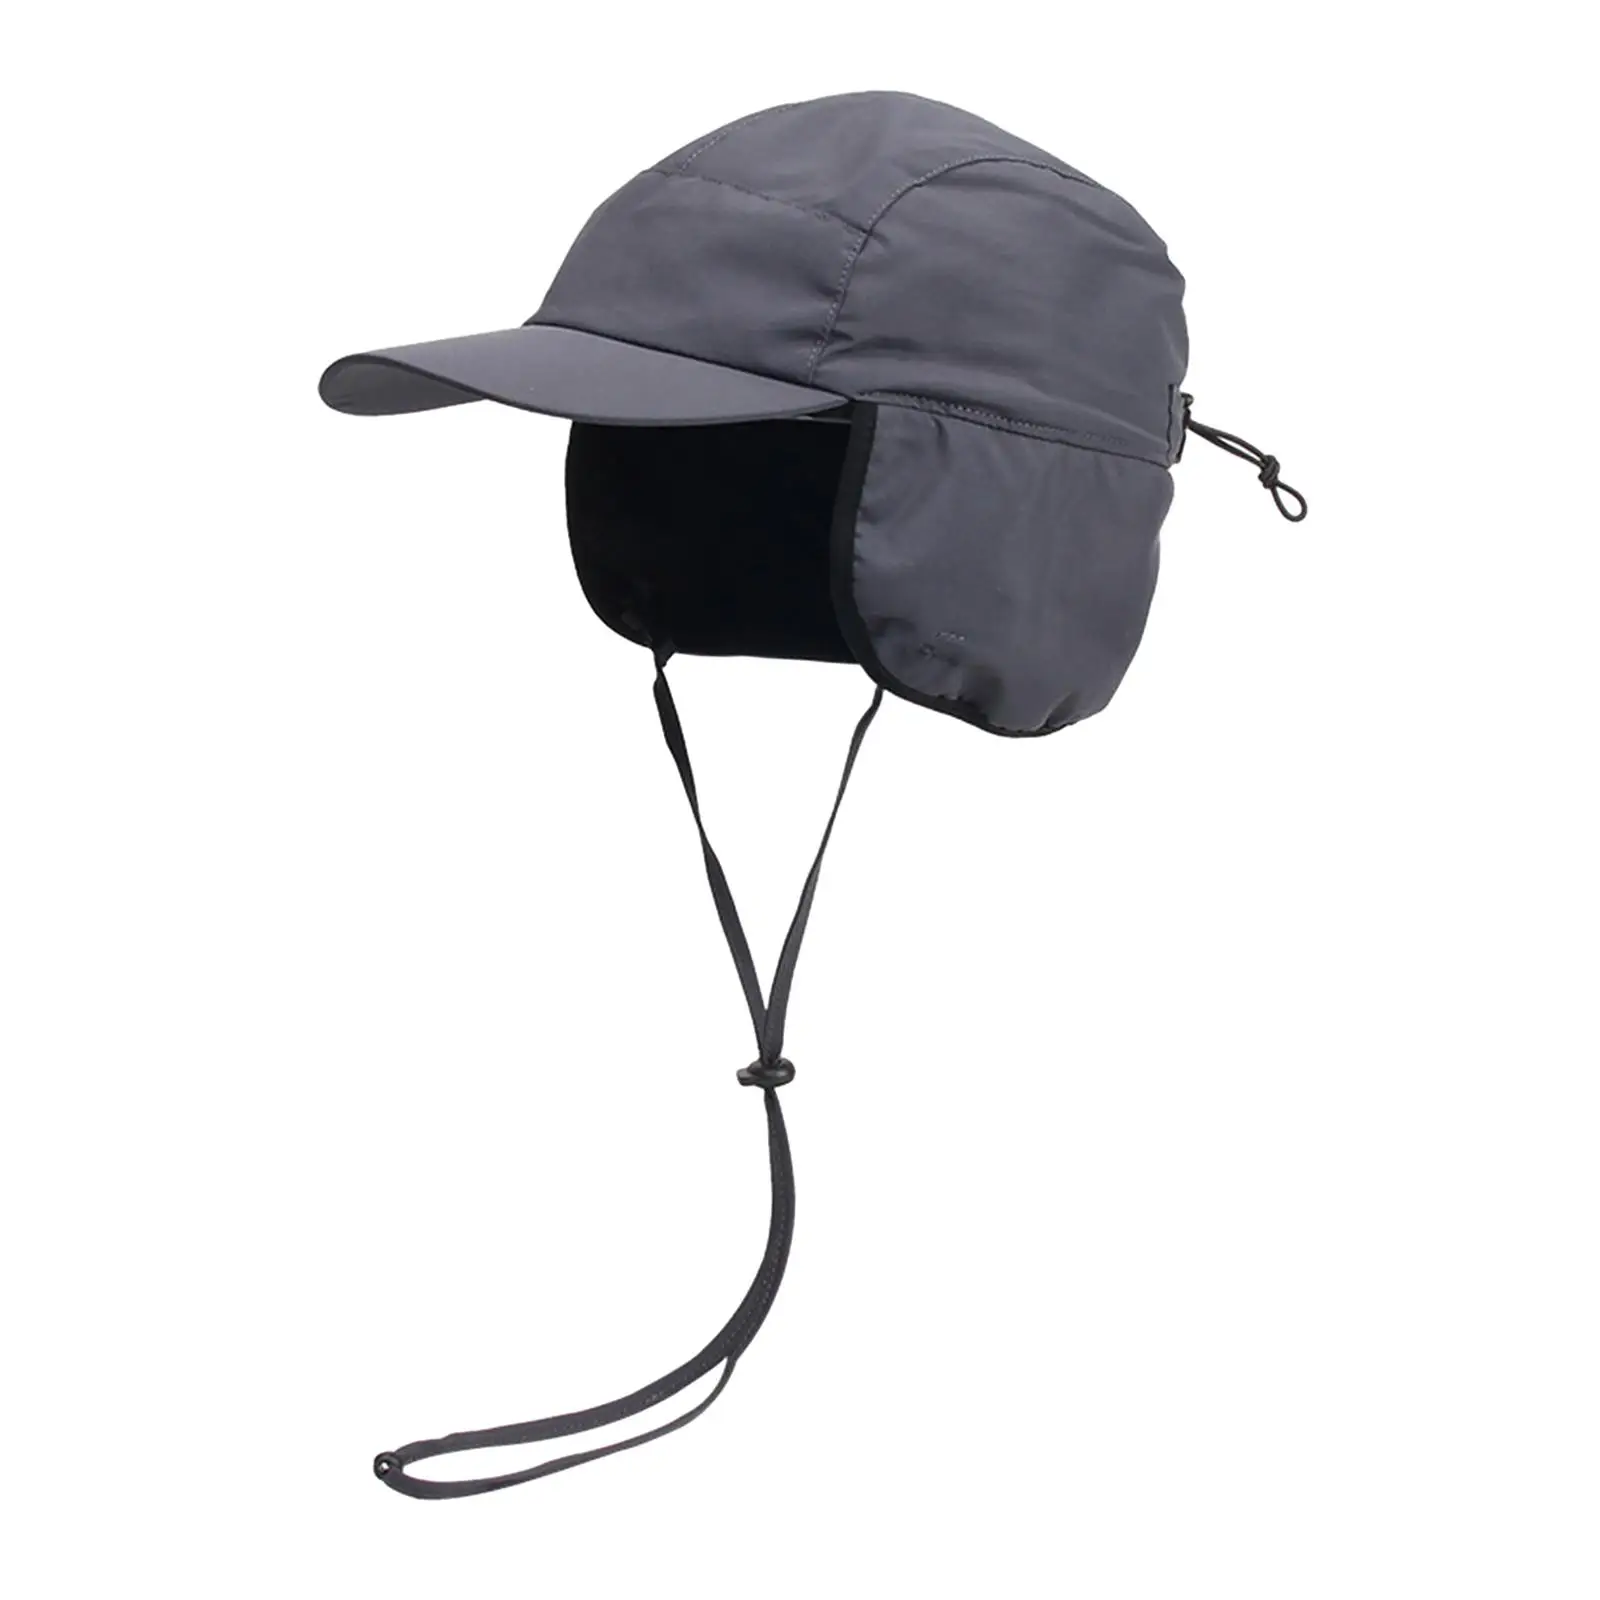 Trapper Hat Fashionable Autumn Casual Headwear Adjustable Waterproof Snow Hat Winter Hat for Running Biking Hiking Ski Cycling